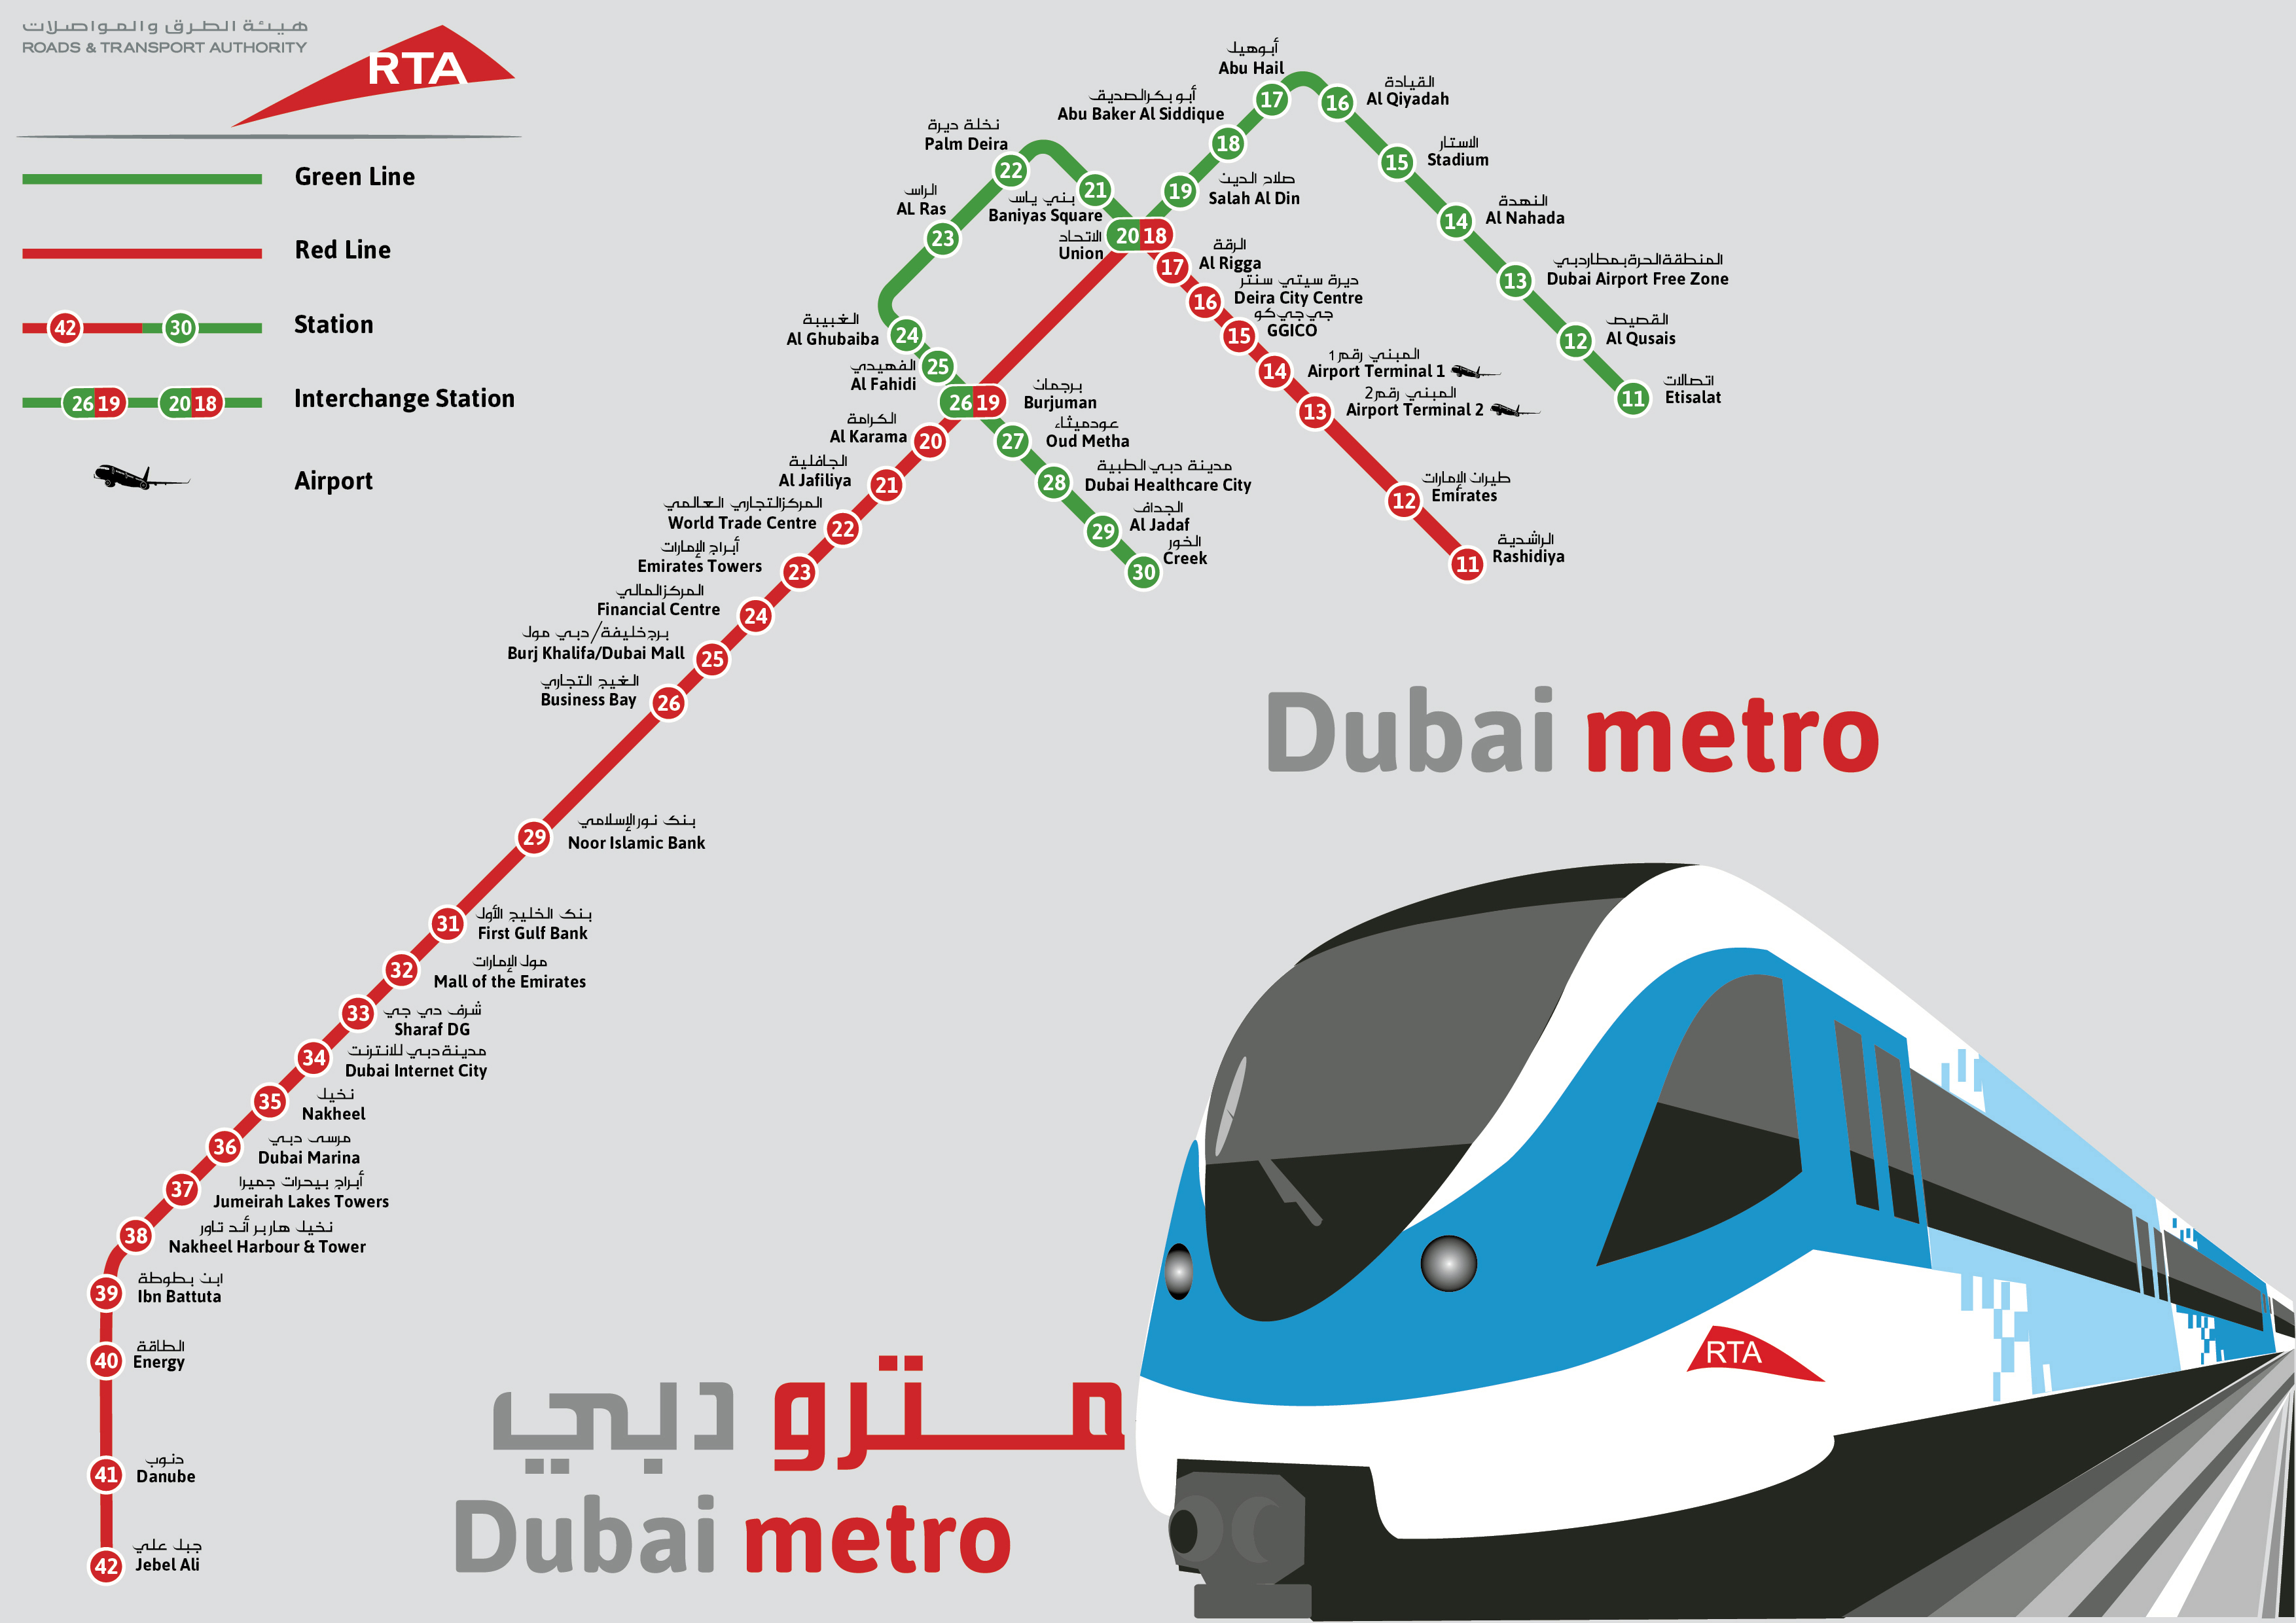 Large detailed metro map of Dubai city | Dubai | UAE (United Arab